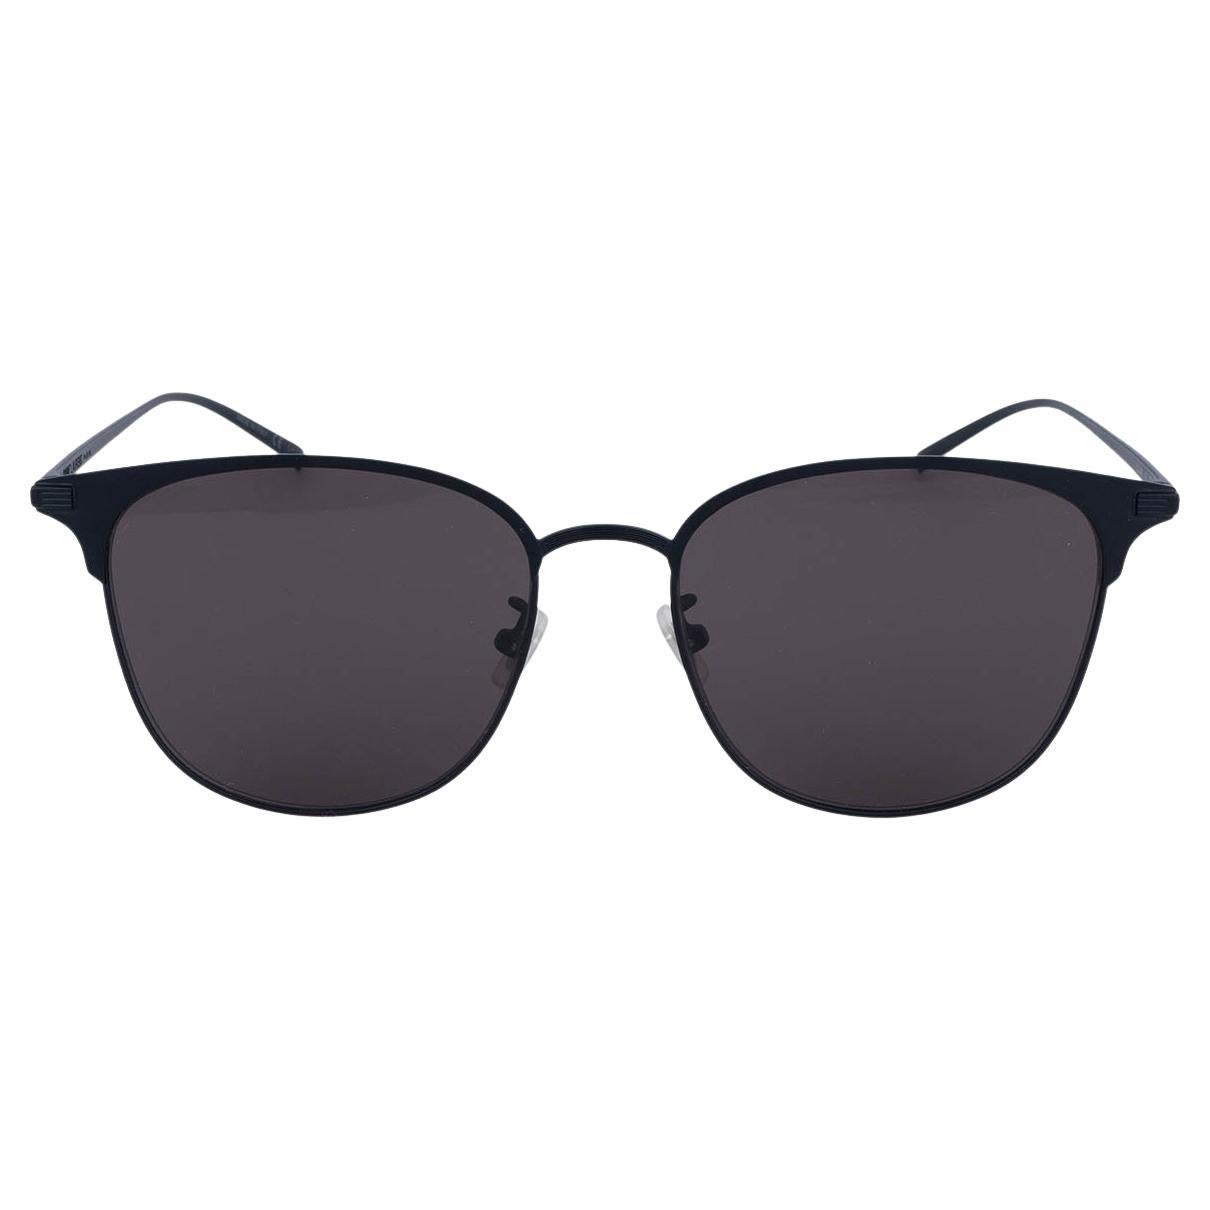 Are Saint Laurent sunglasses polarized?